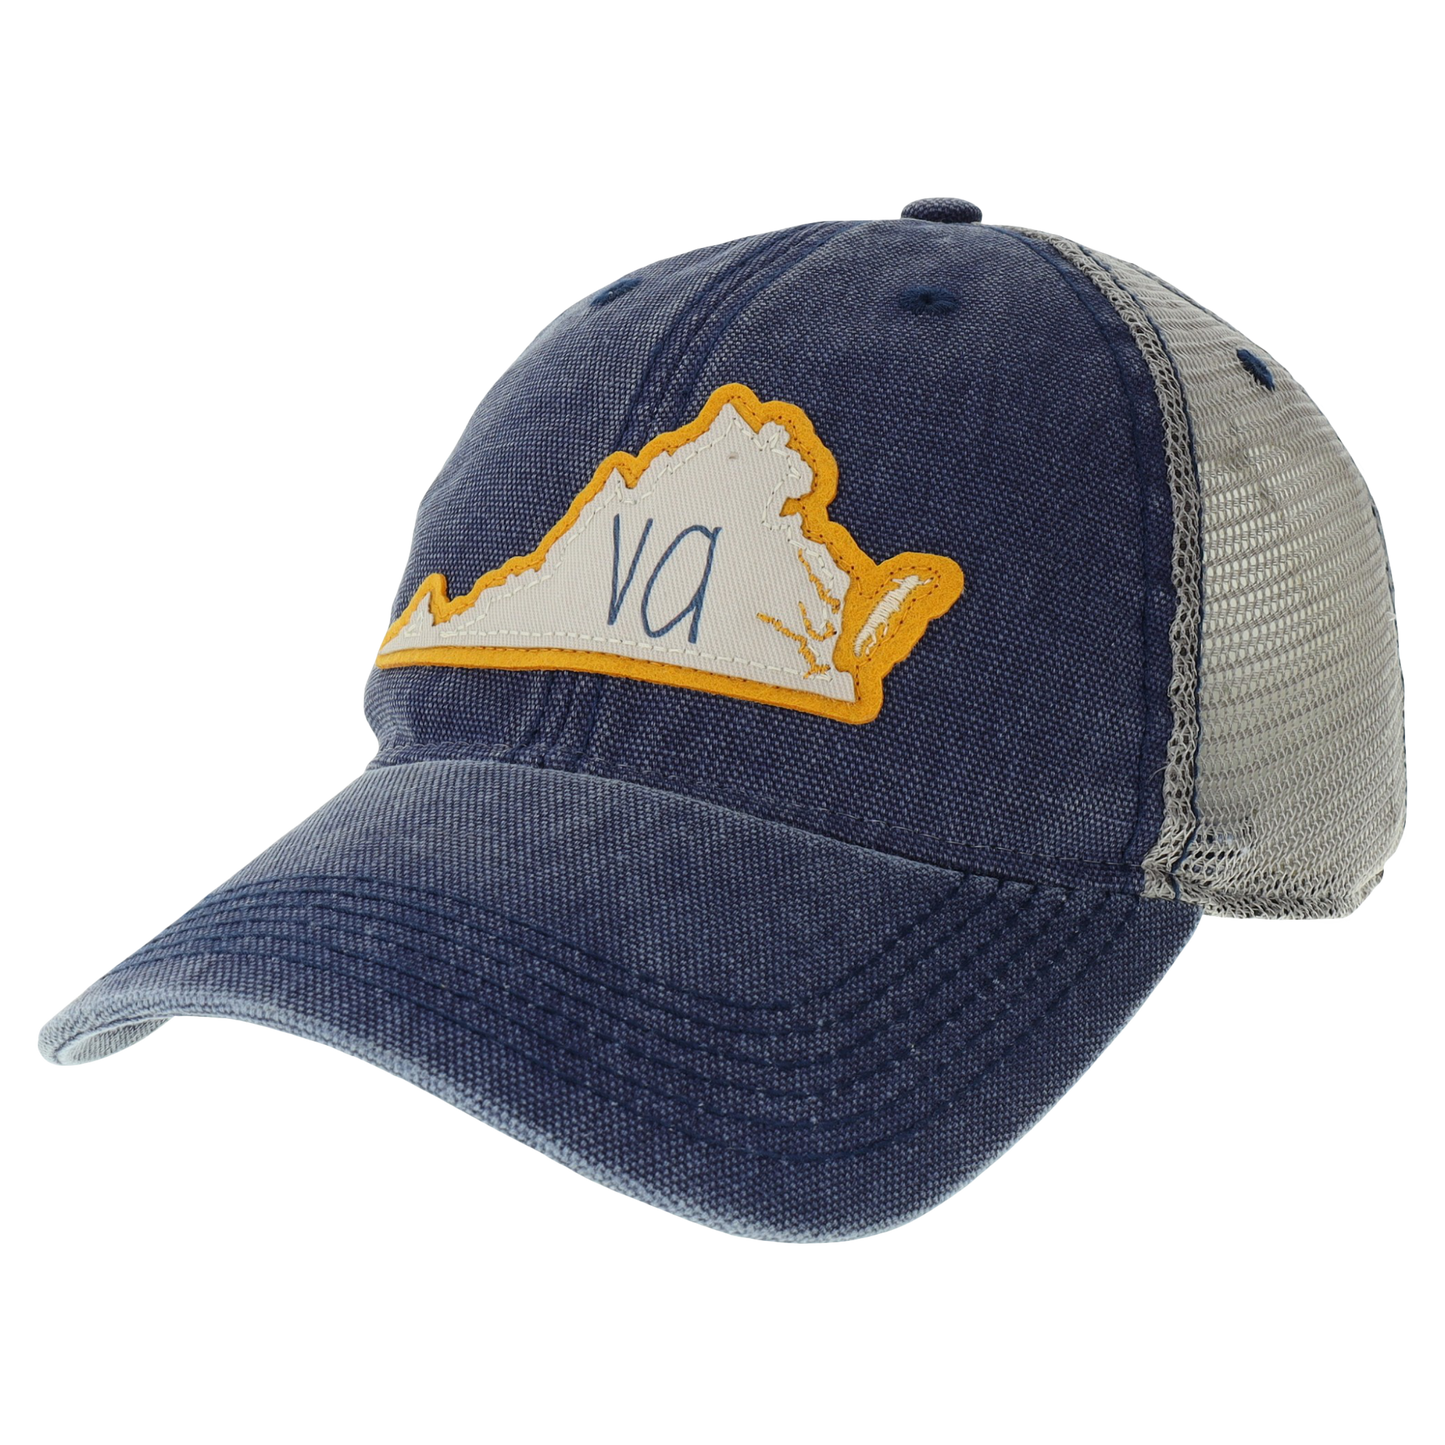 Virginia Dashboard Trucker Hat in Navy/Grey